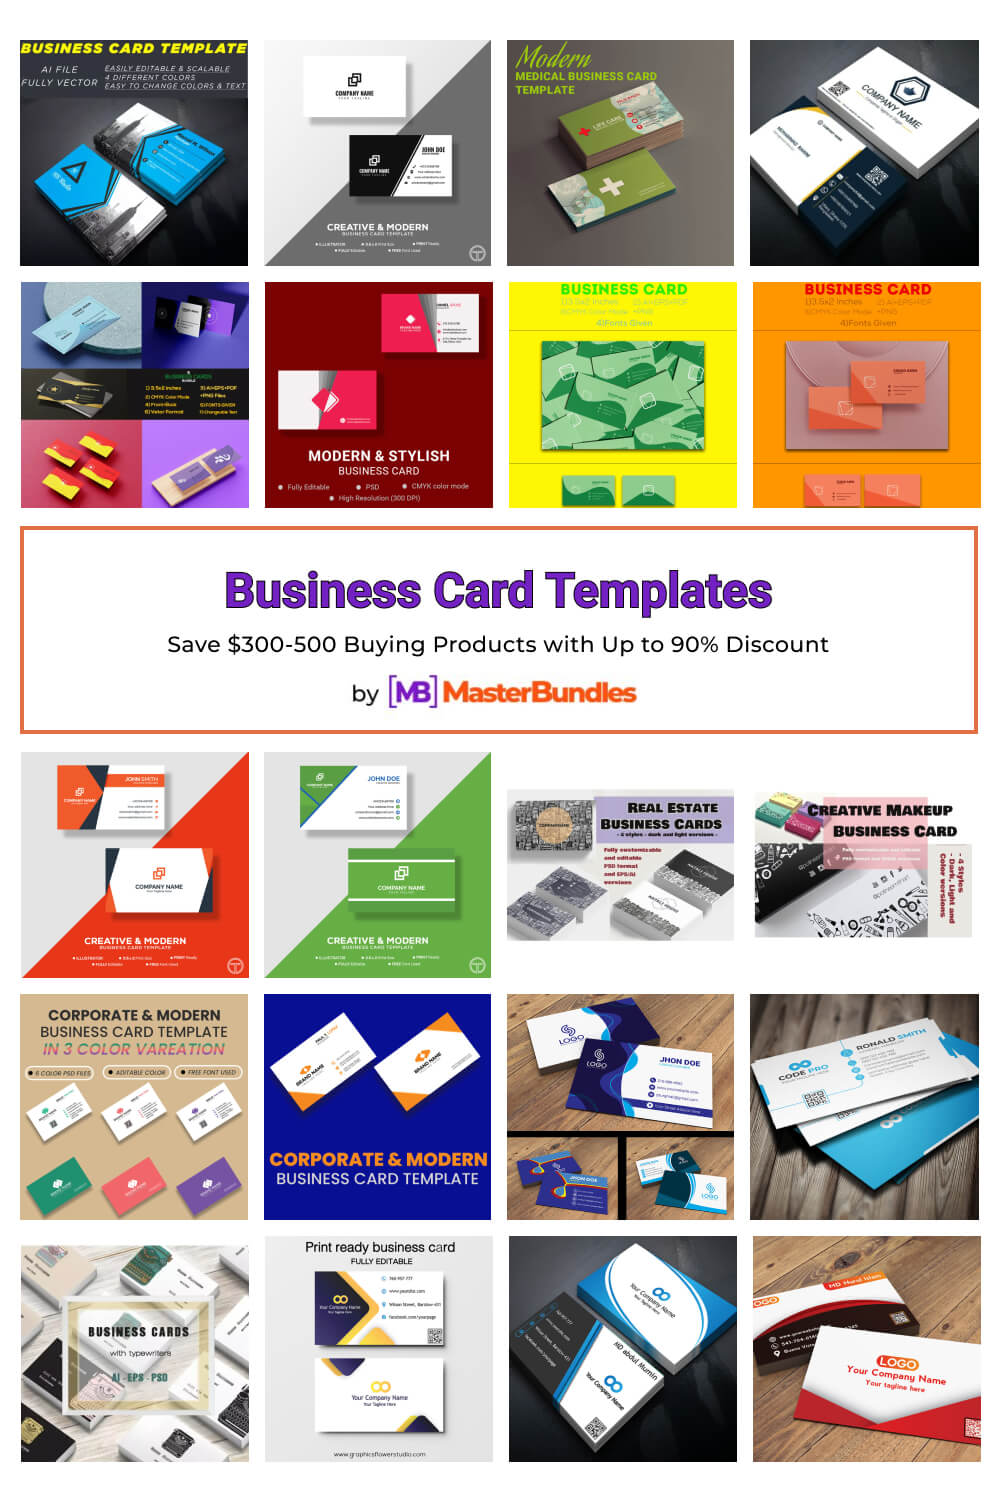 business card templates pinterest image.